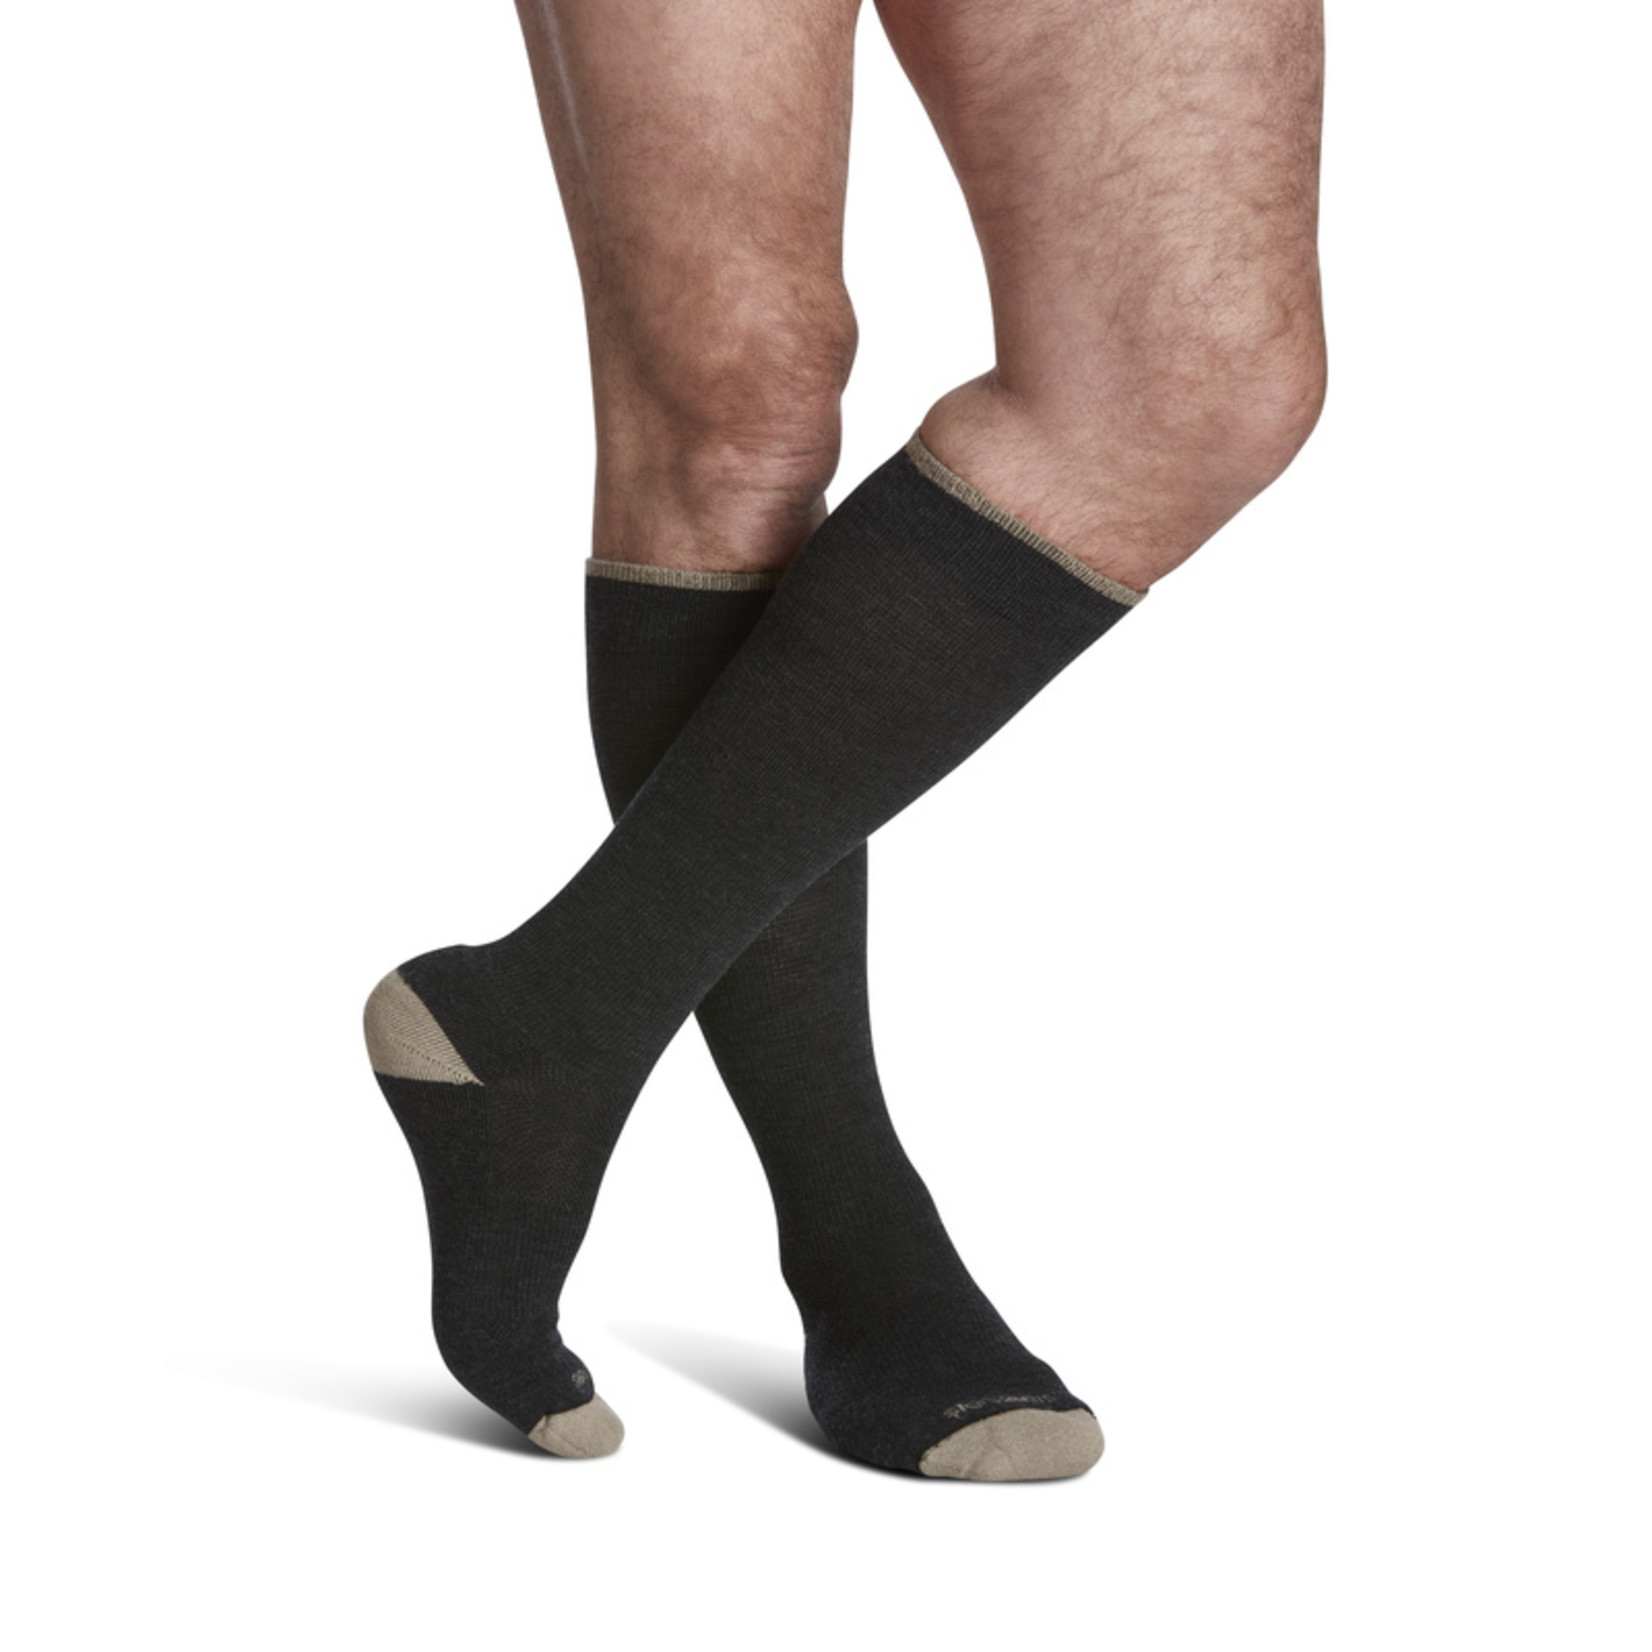 SIGVARIS Merino Outdoor Socks Calf 15-20mmHg